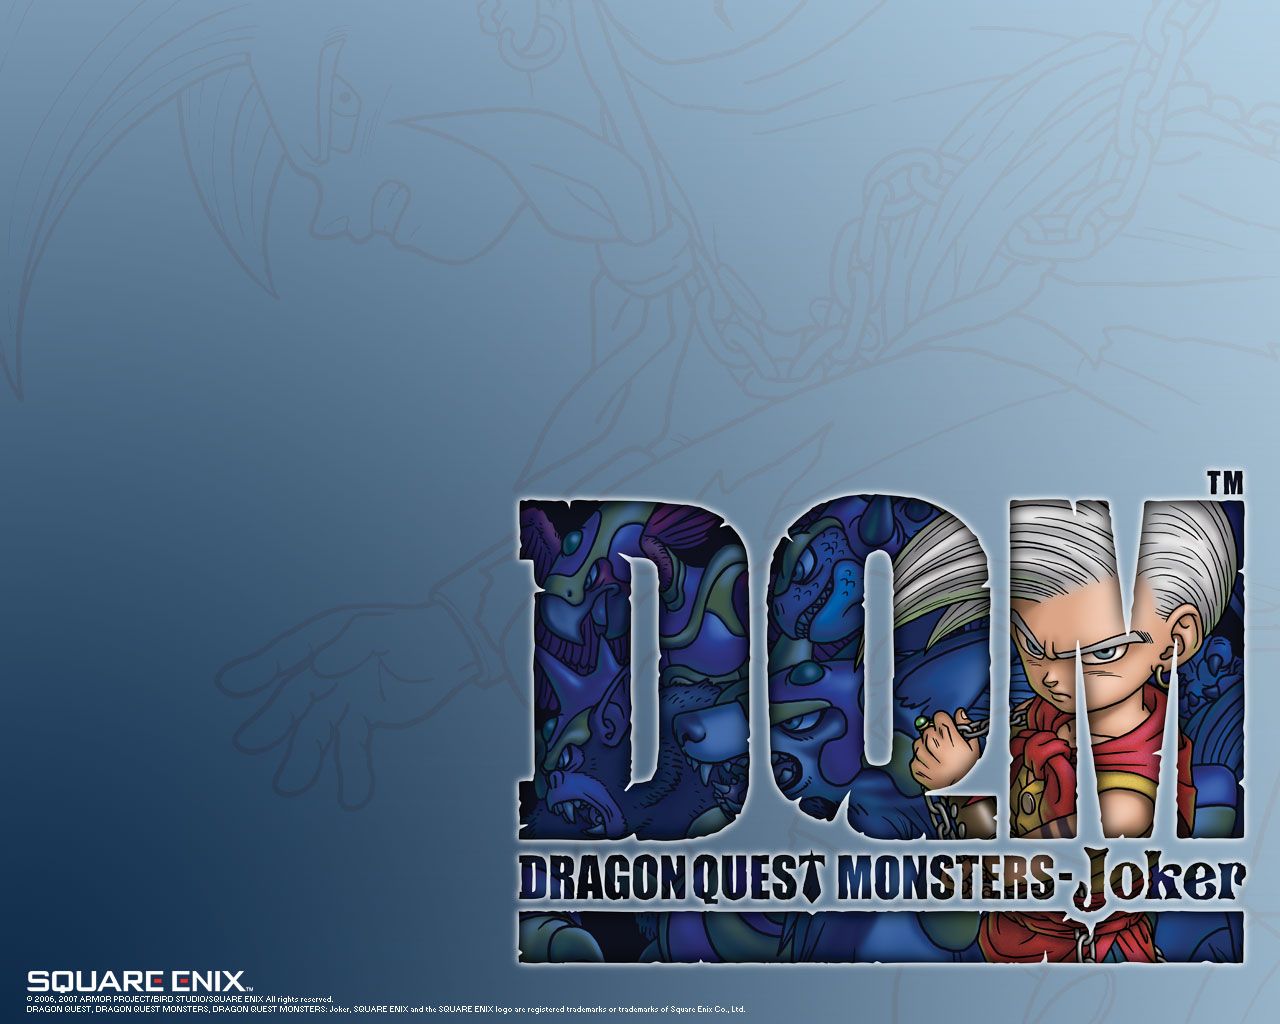 ... Videojuegos (Blog): Fondos de pantalla Dragon Quest Monsters: Joker DS